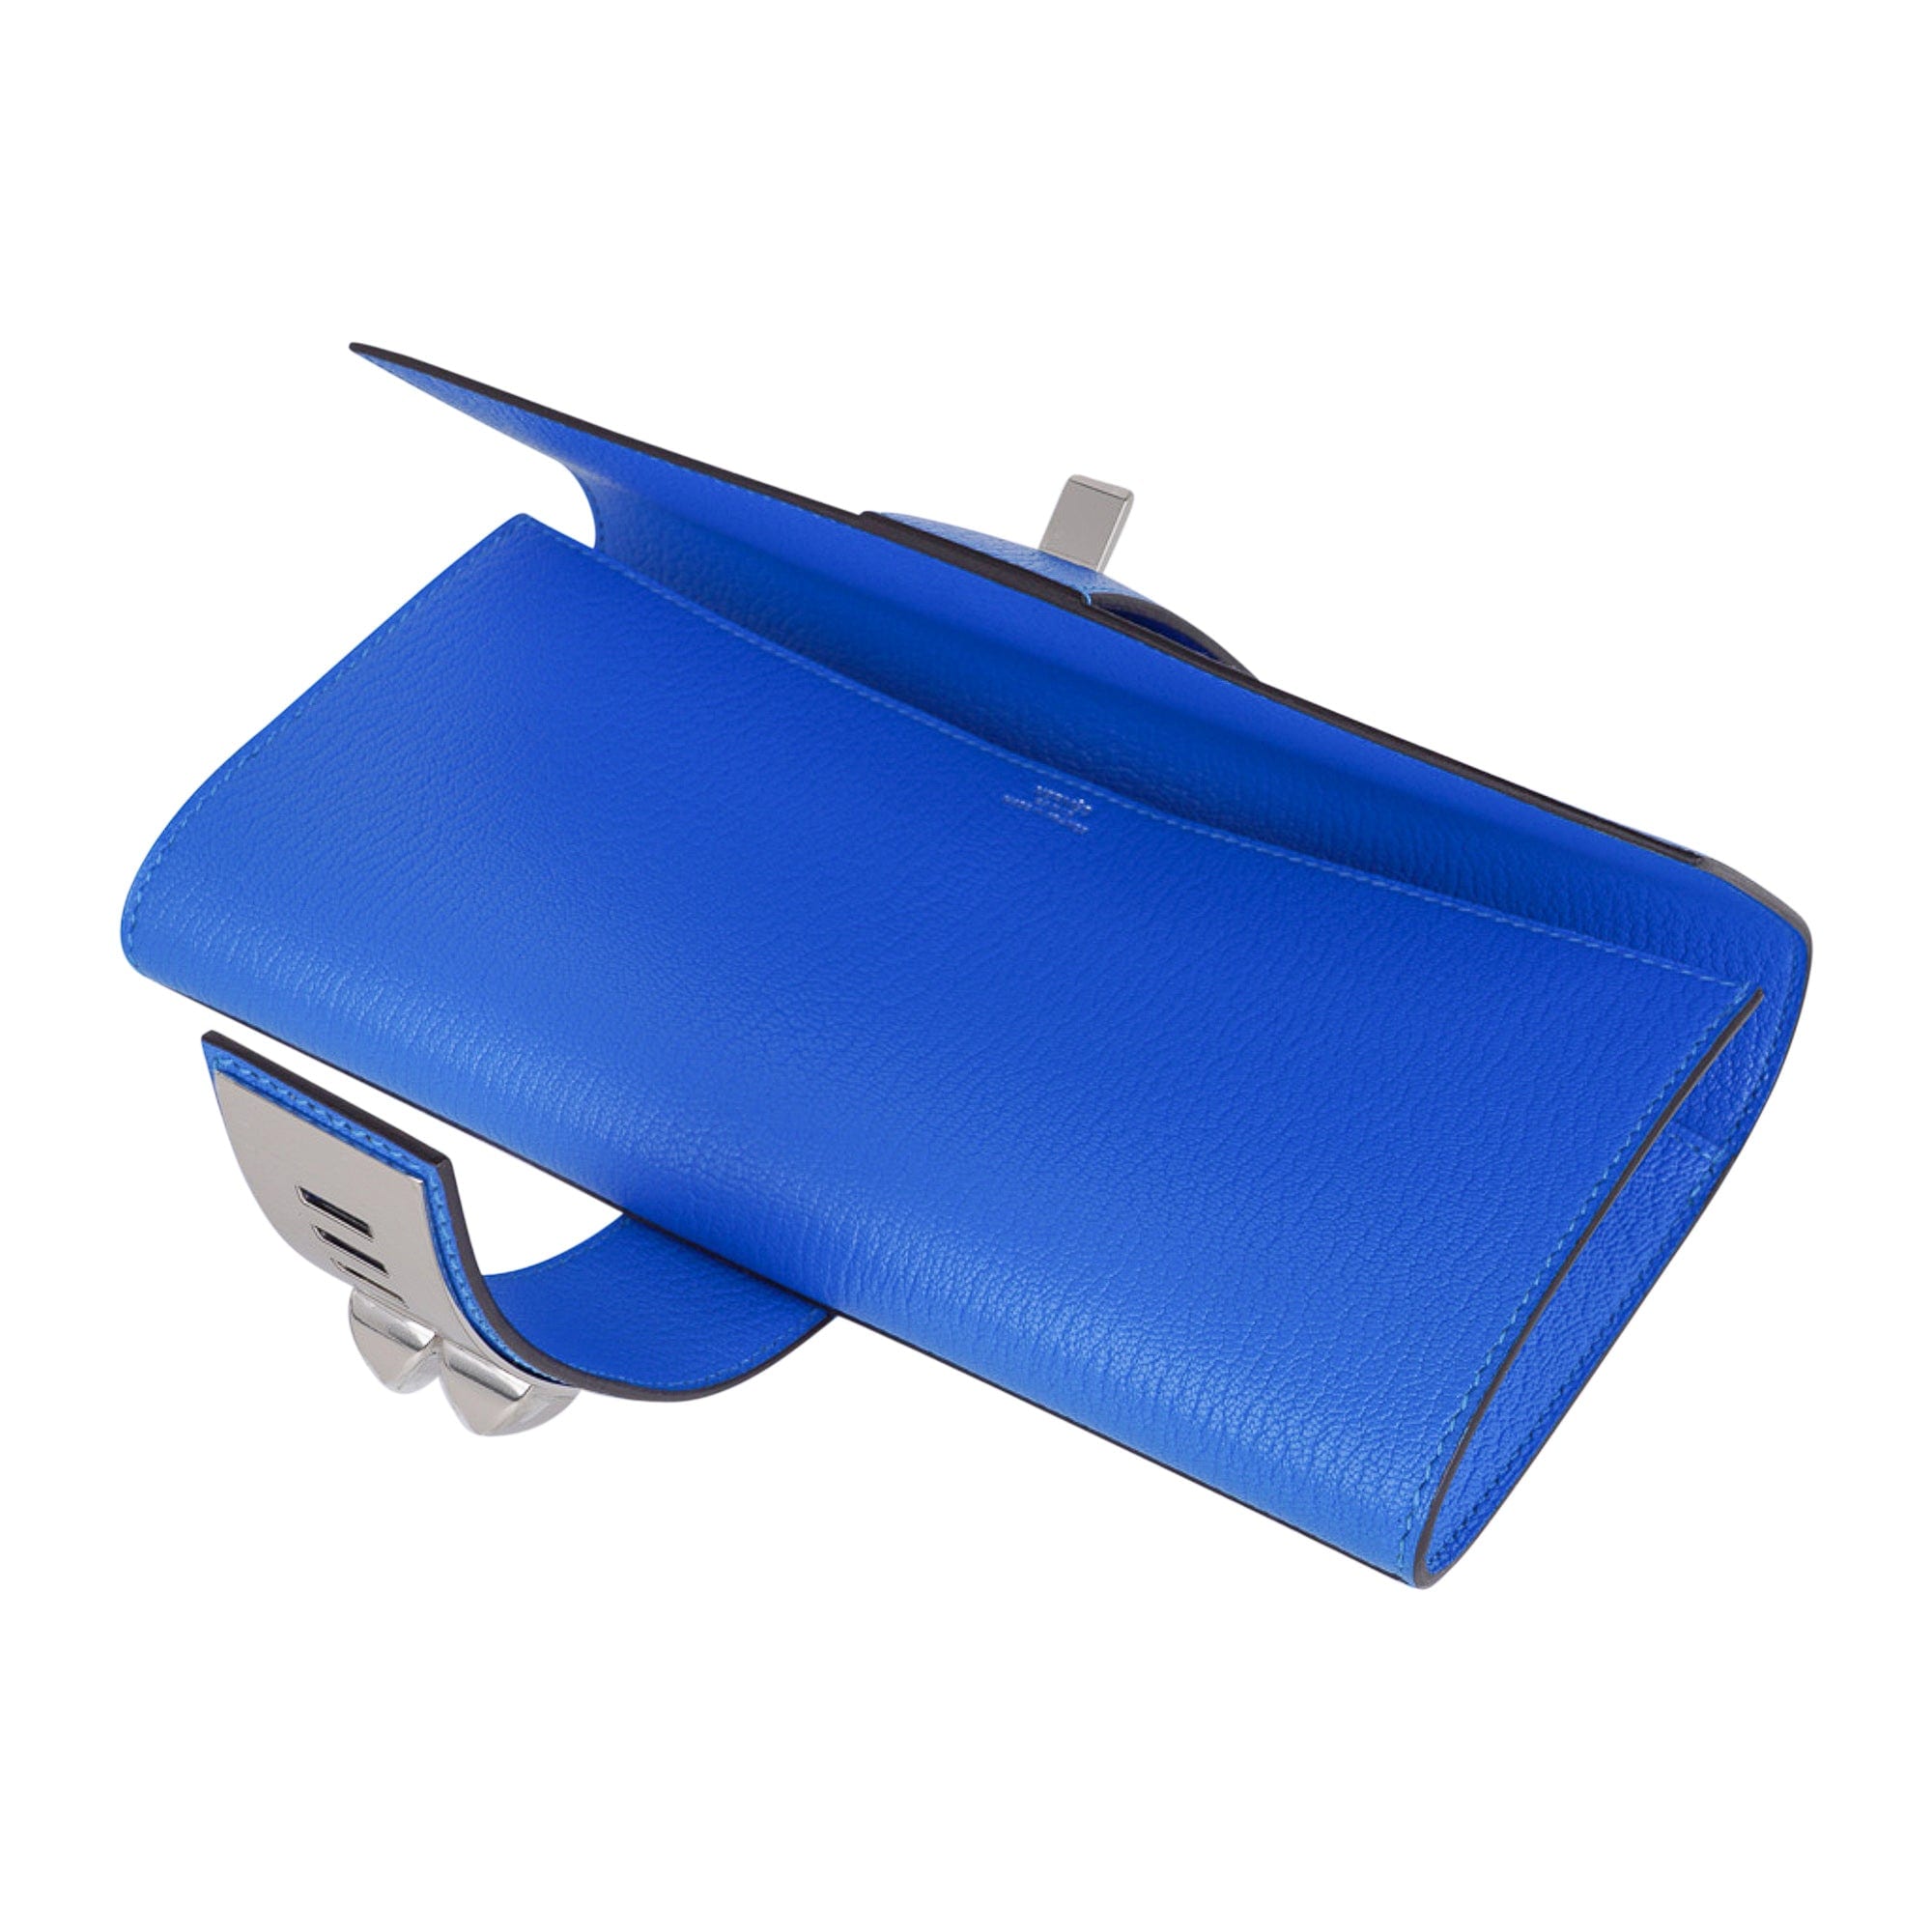 Hermes Medor Clutch Bag Blue Hydra Palladium Hardware • MIGHTYCHIC